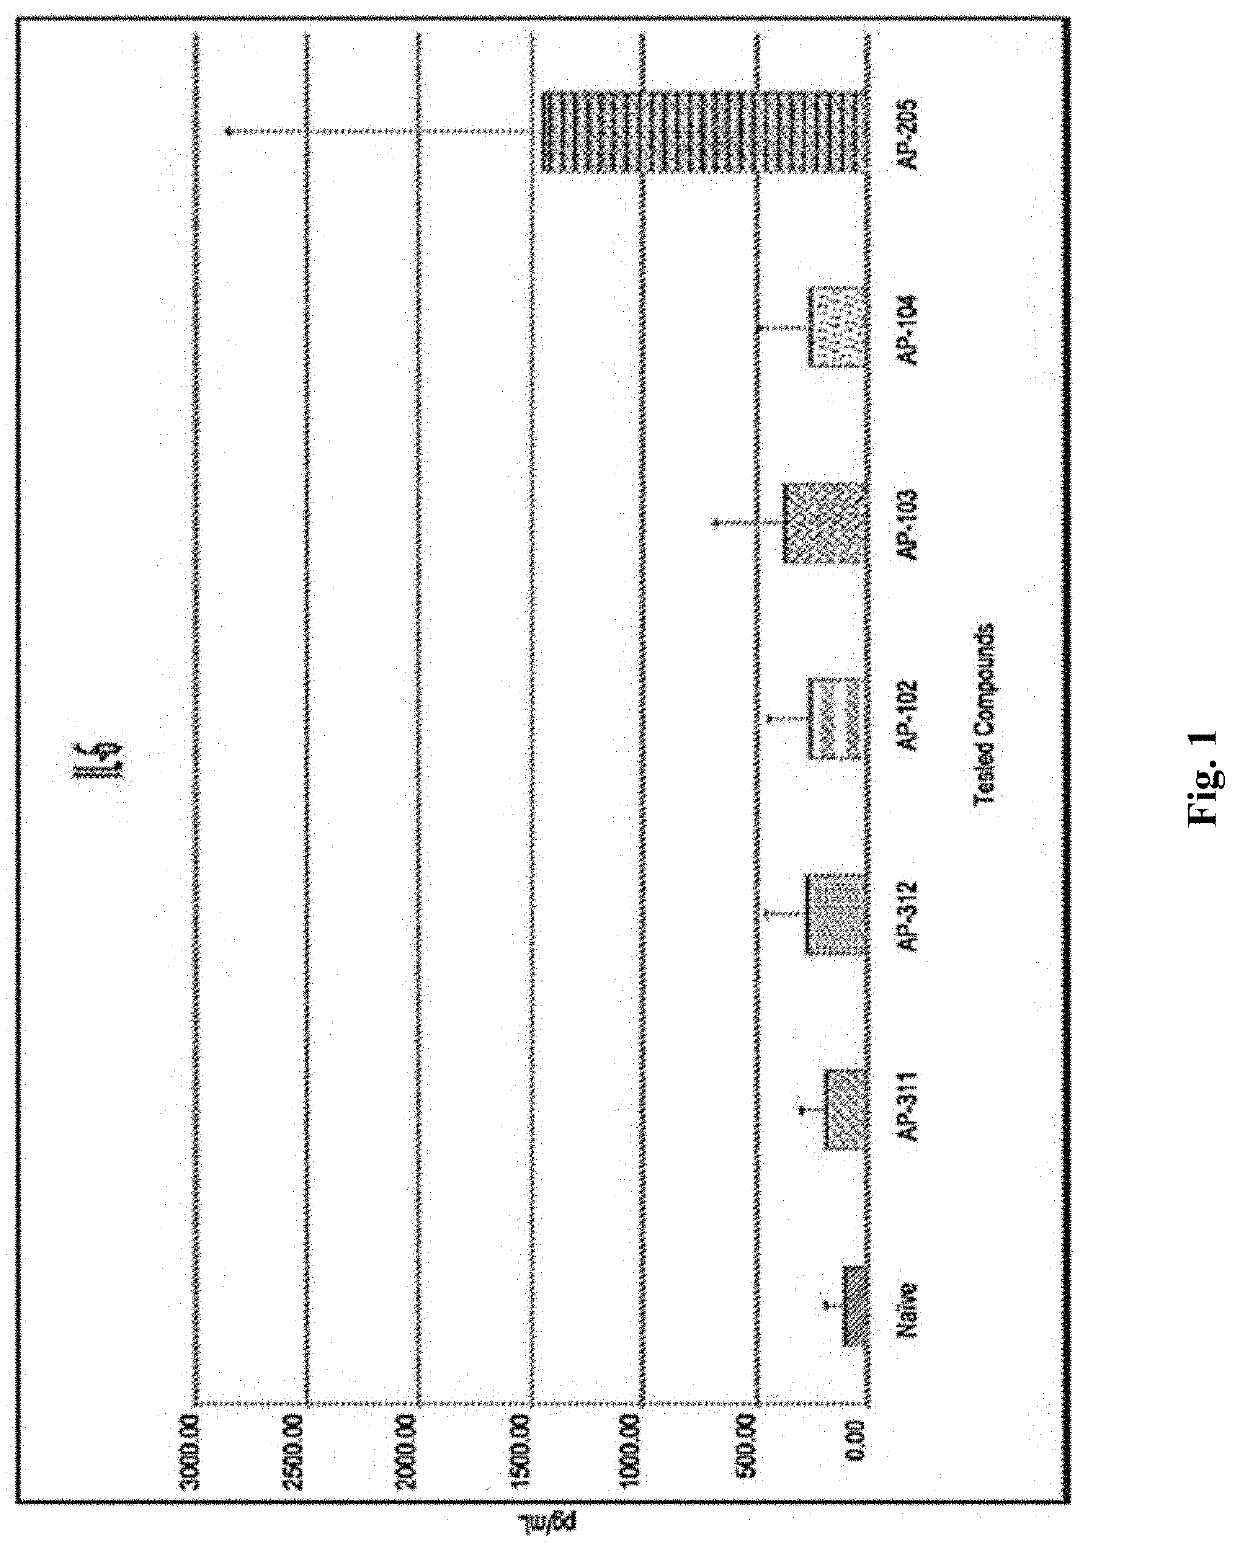 Method for Immunomodulation of using Aza-podophyllotoxin derivatives